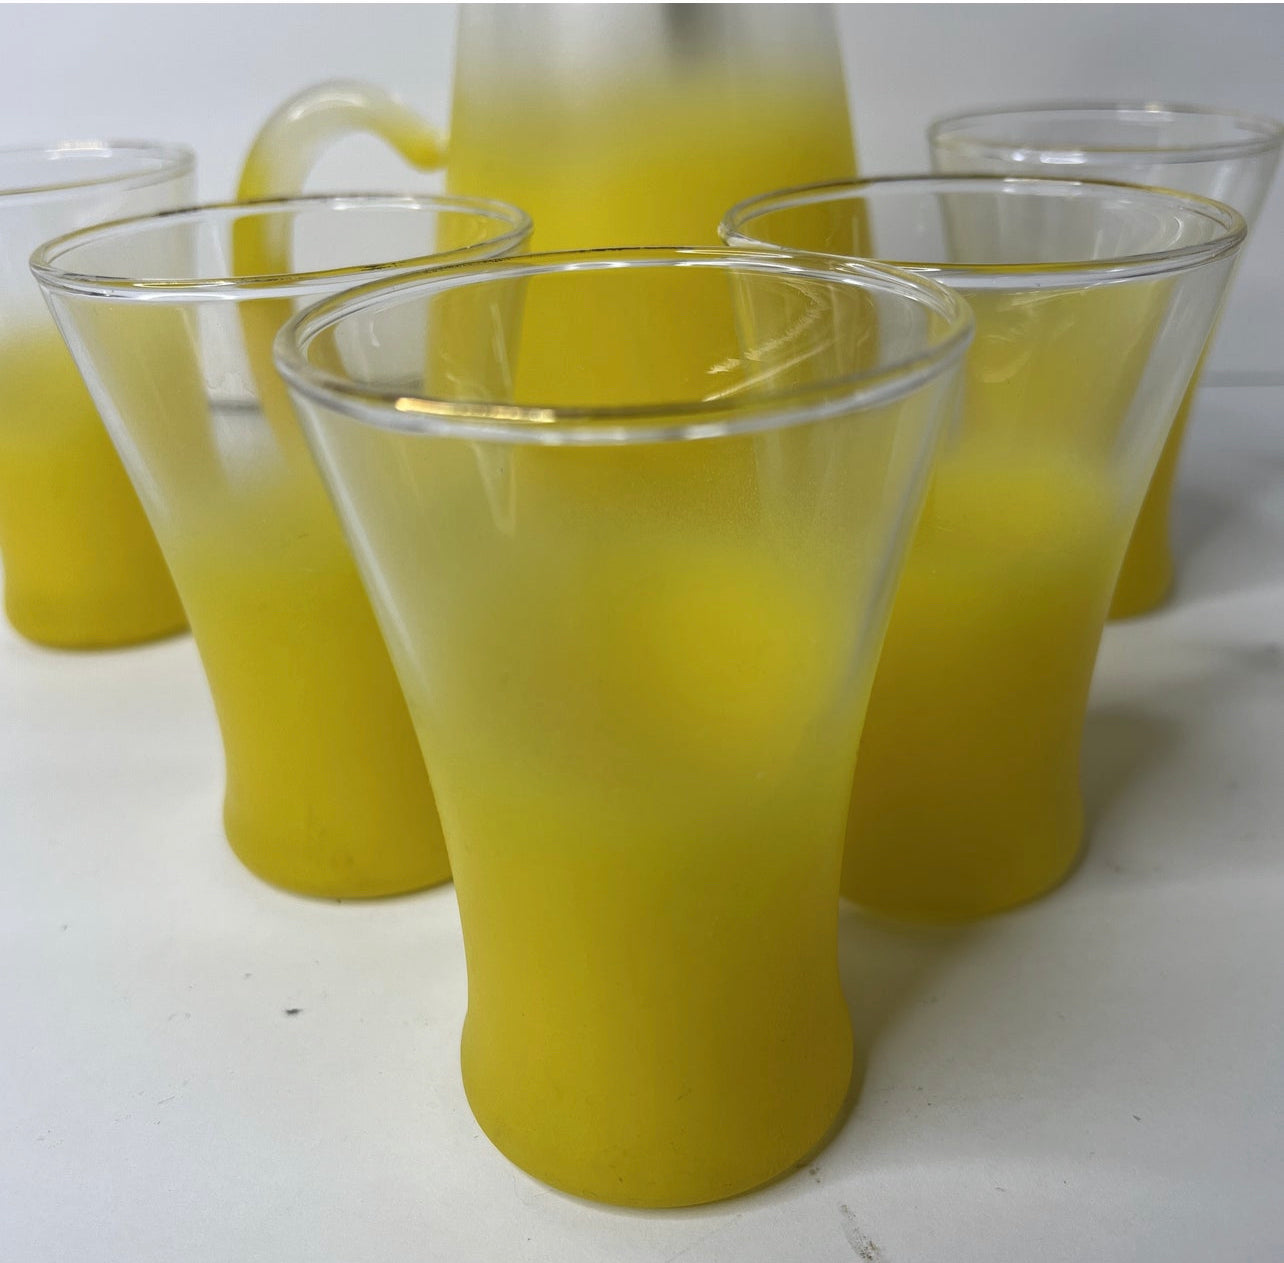 1950s Vintage Yellow Blendo Glass Set 6 Piece Drink Cocktail Mid Century Modern